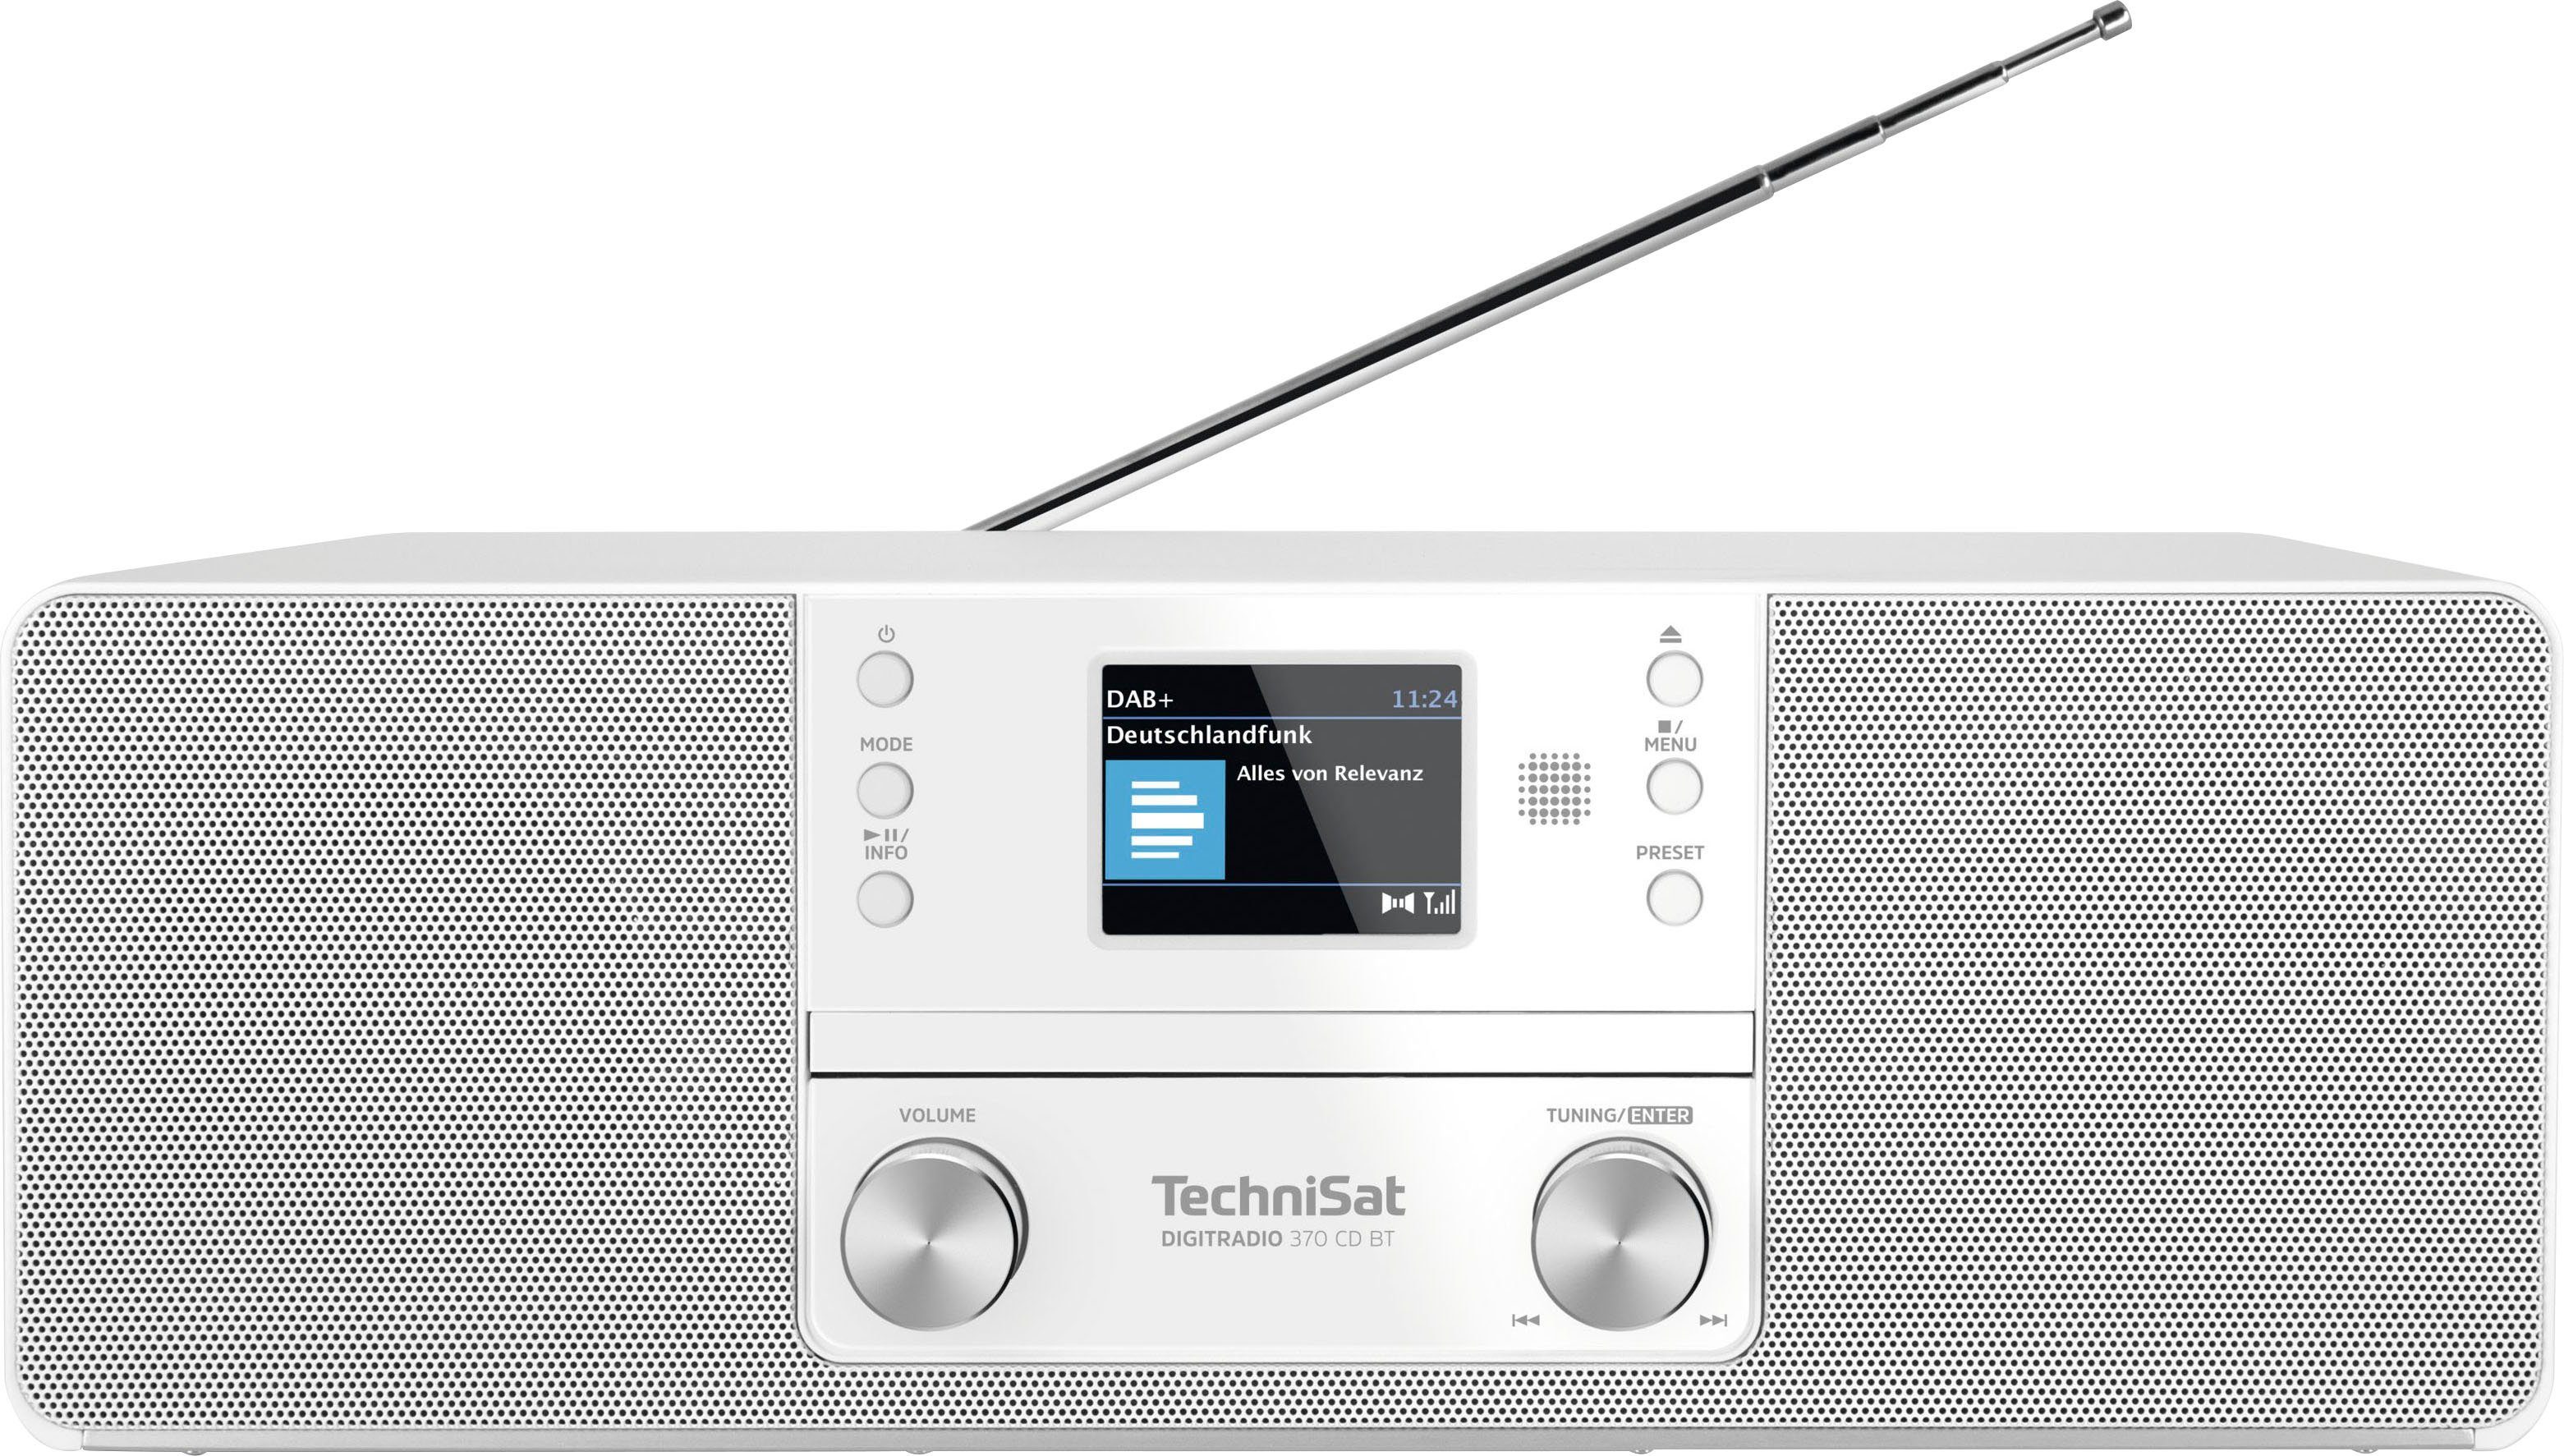 TechniSat DIGITRADIO 370 UKW 10 RDS, BT CD (Digitalradio Digitalradio W) (DAB) (DAB), mit weiß